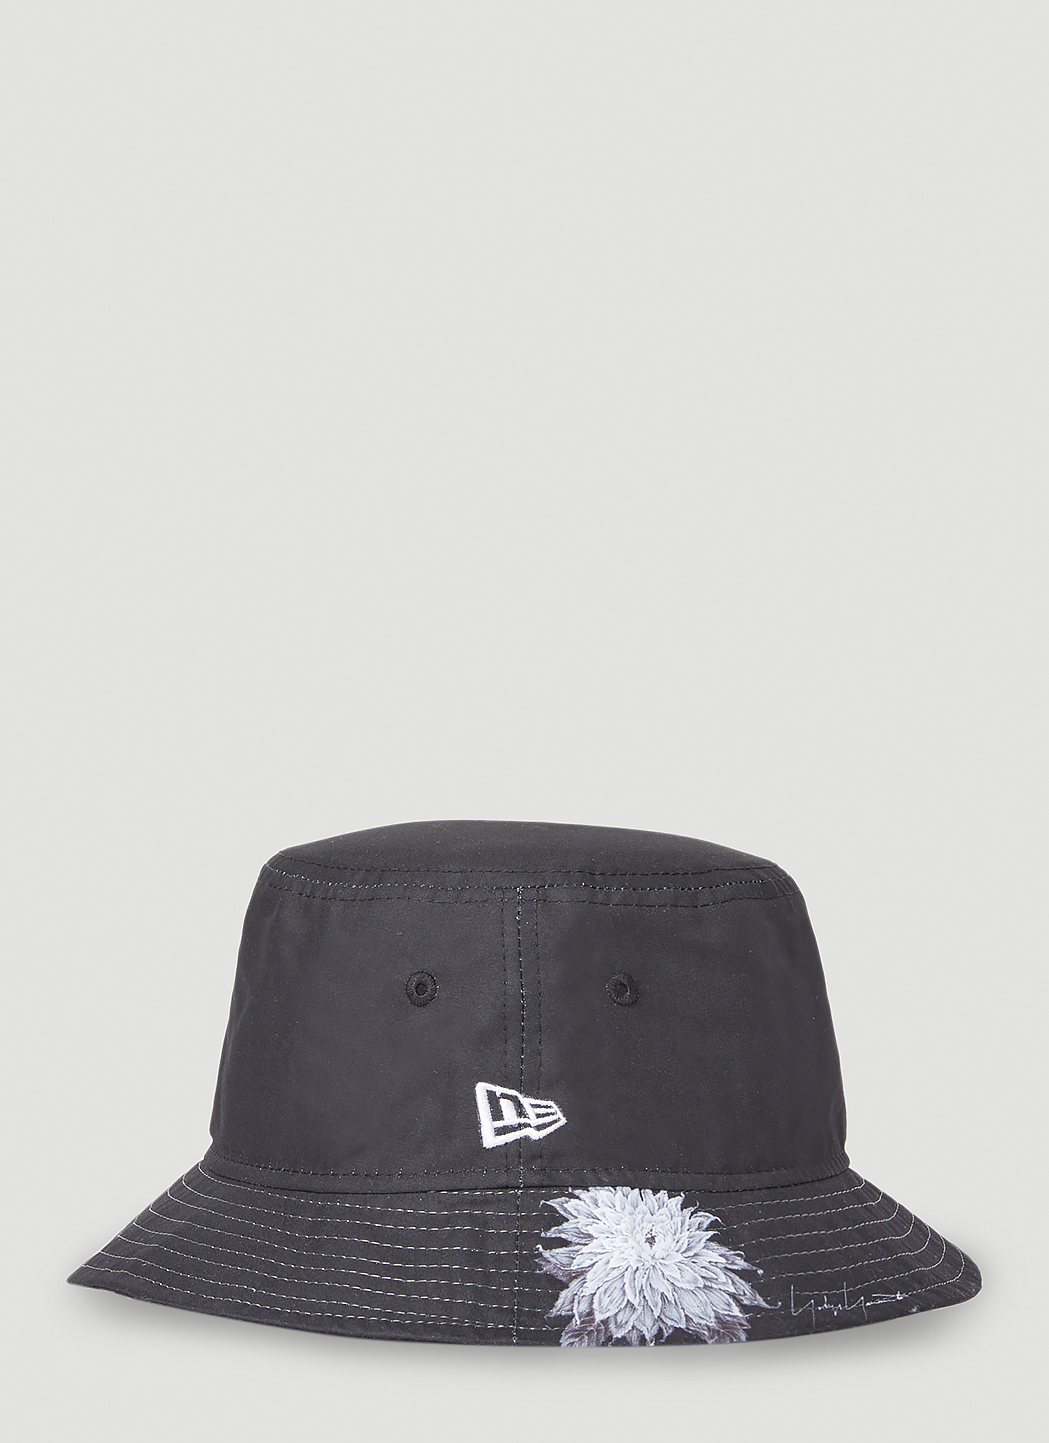 Yohji Yamamoto x New Era Dahlia Bucket Hat - Man Hats Black 2